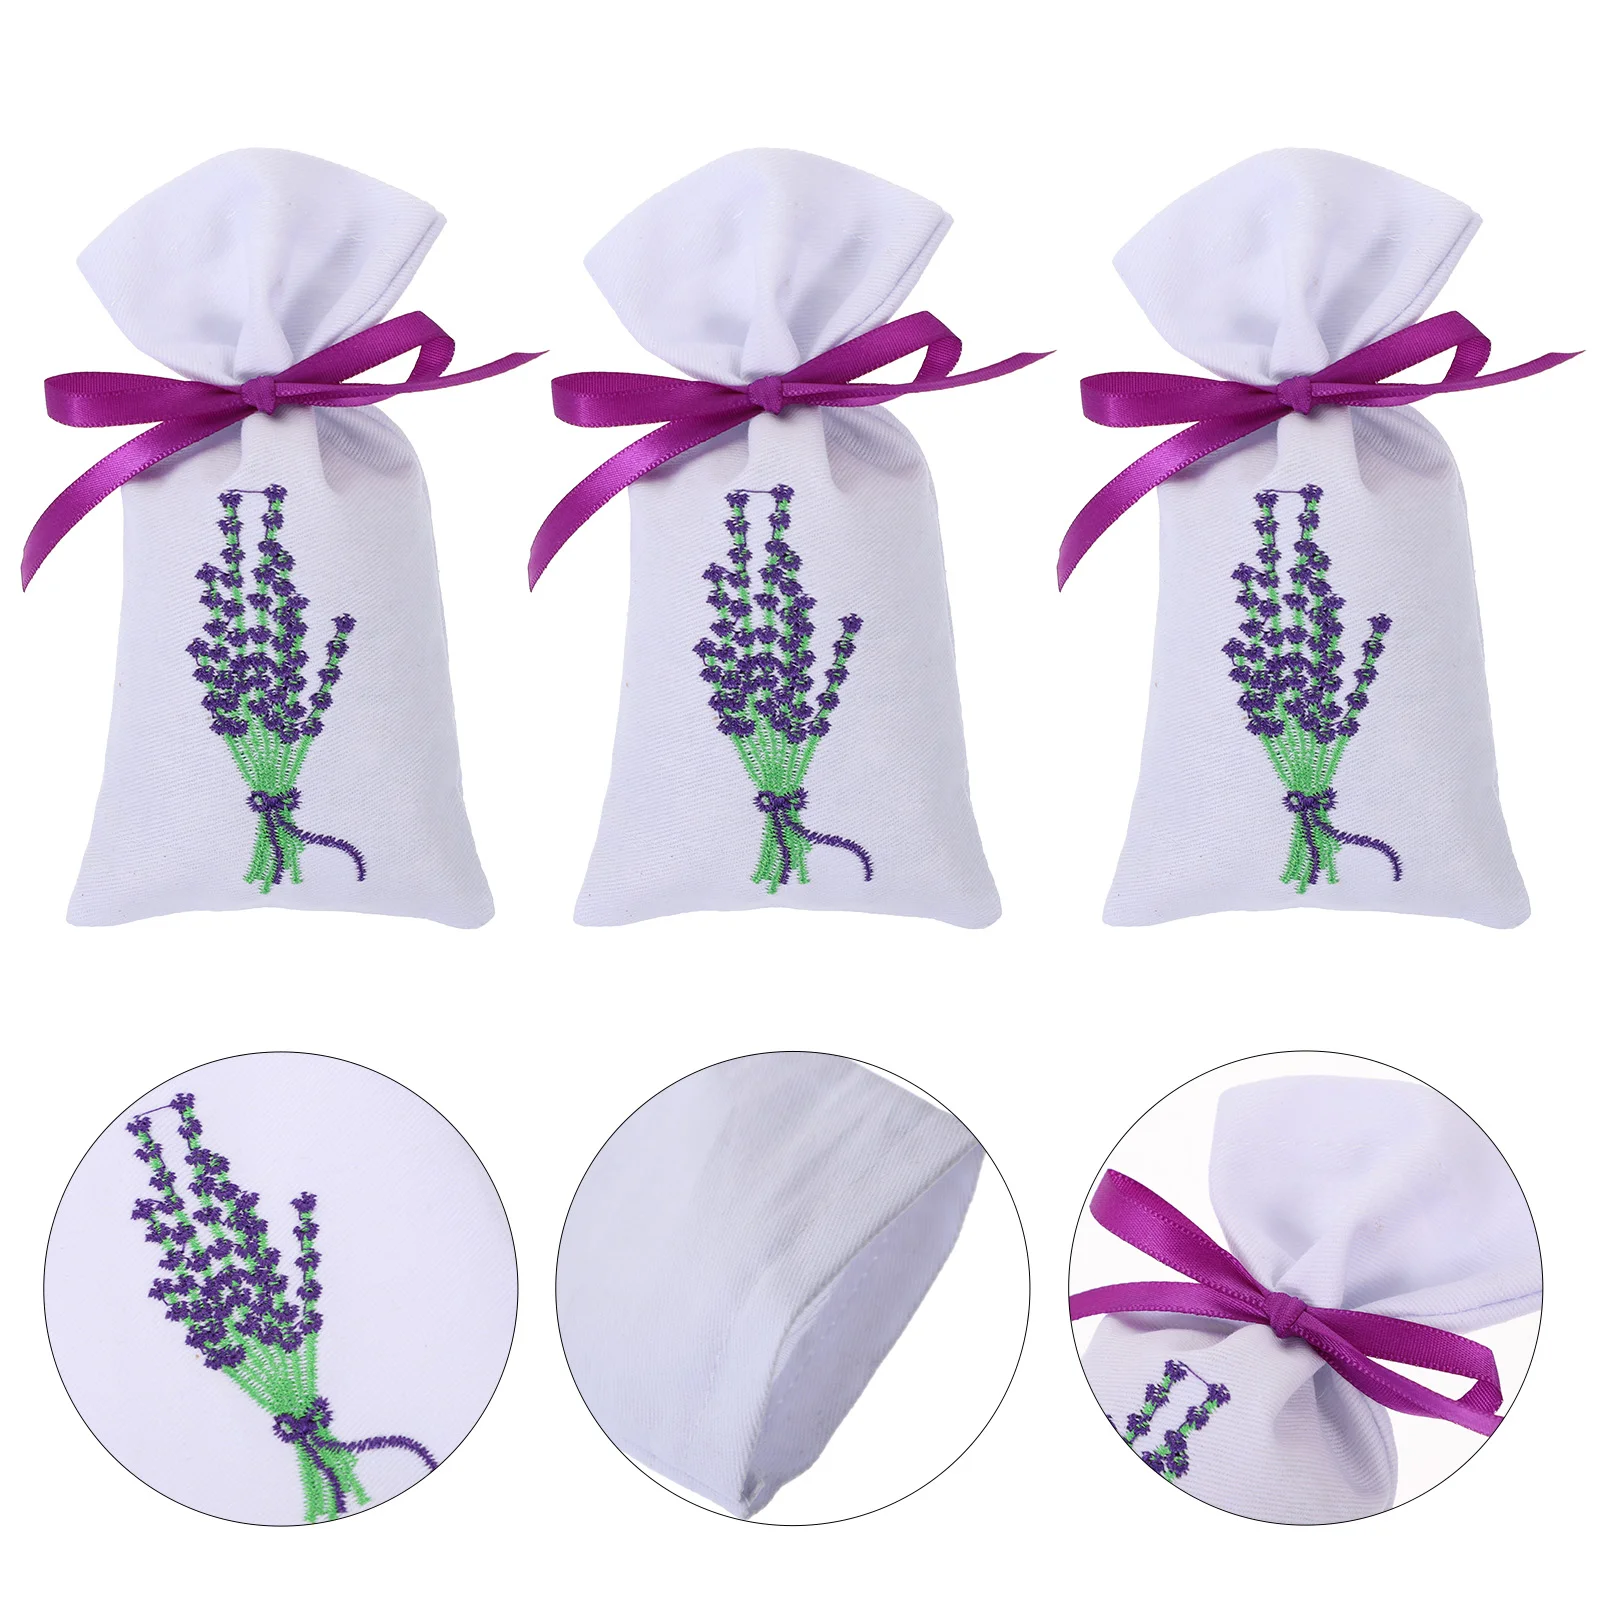 

6 Pcs Wedding Jewelry Candy Case Bag Lavender Perfume Satchel Drawstring Flower